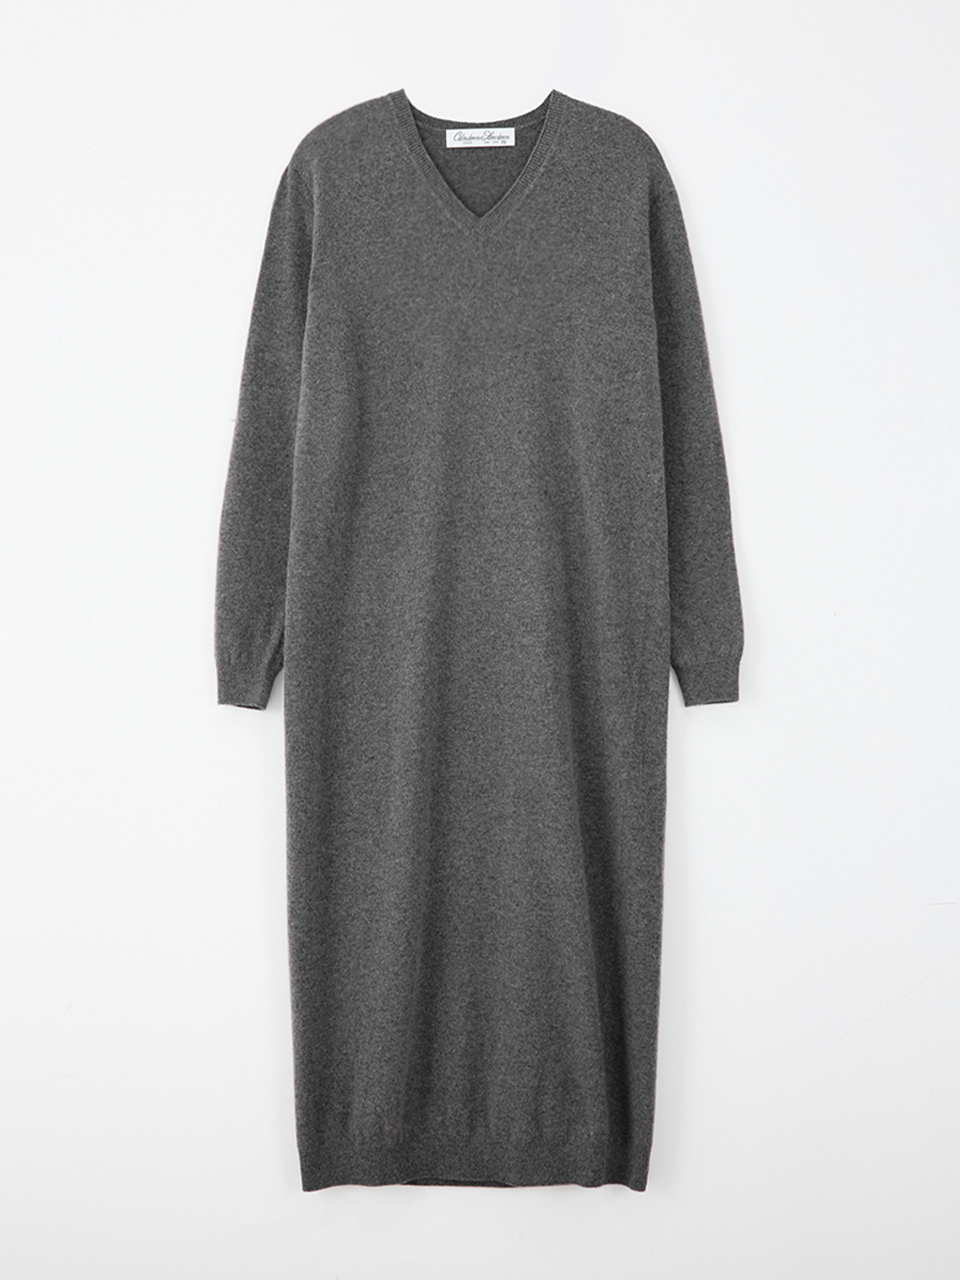 Wool cashmere v-neck dress_dark grey